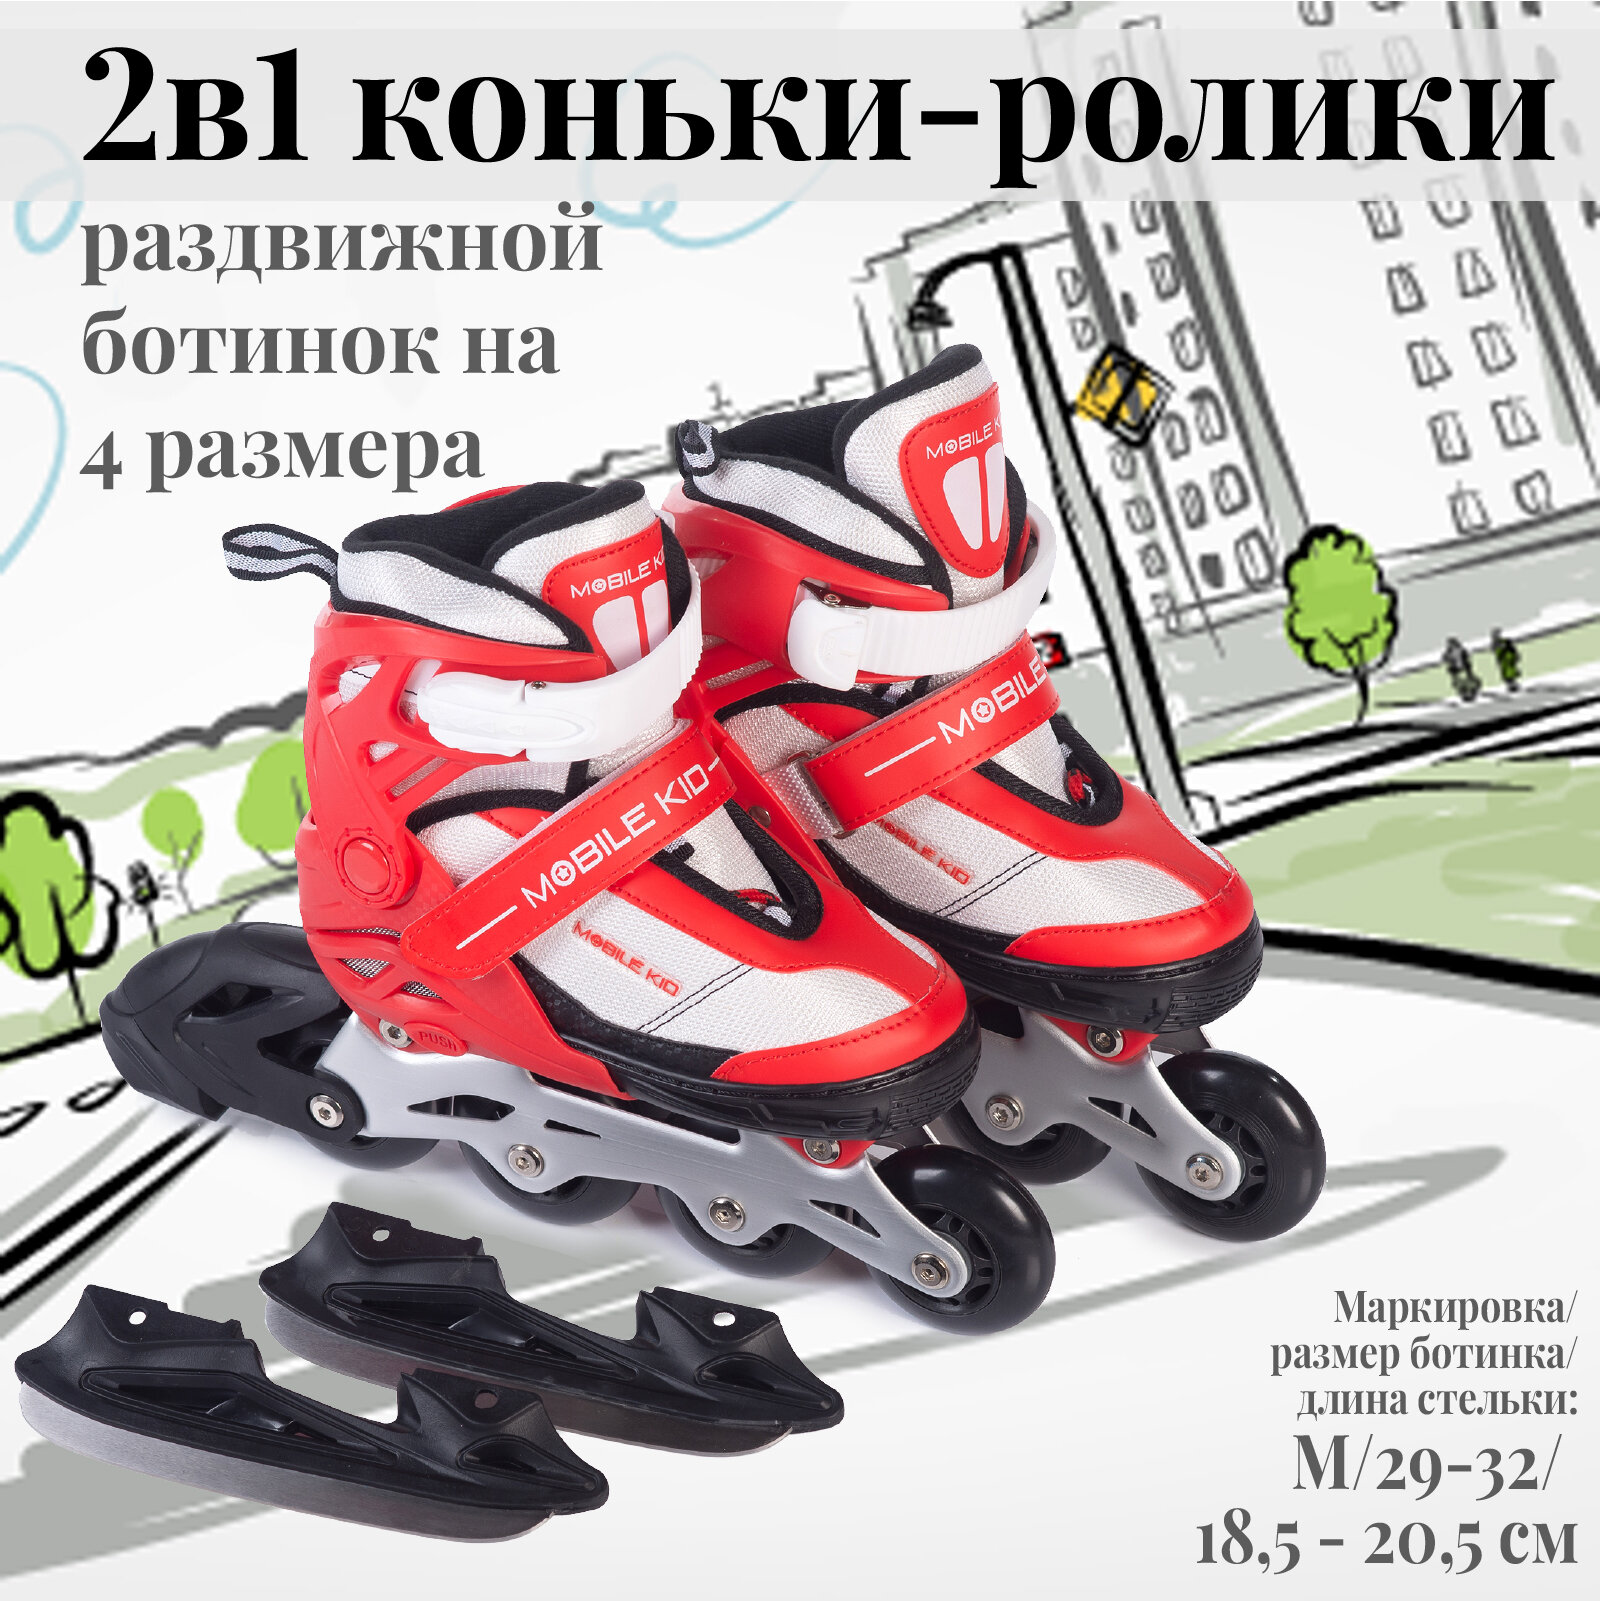 Раздвижные коньки-ролики Mobile Kid Uni Skate (2 в 1), размер M (RED WHITE)